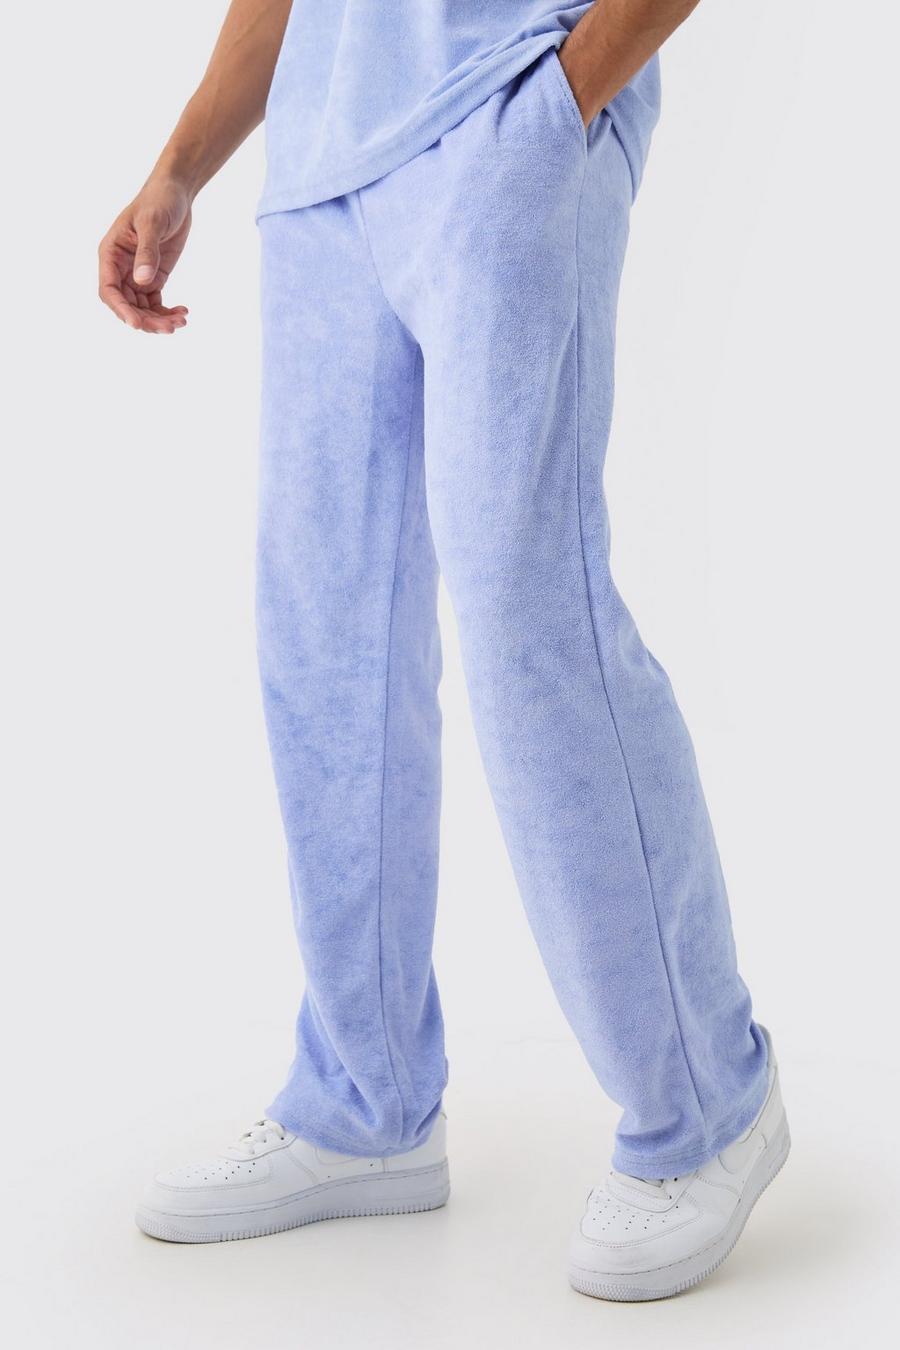 Pantalón deportivo holgado de felpa, Dusty blue